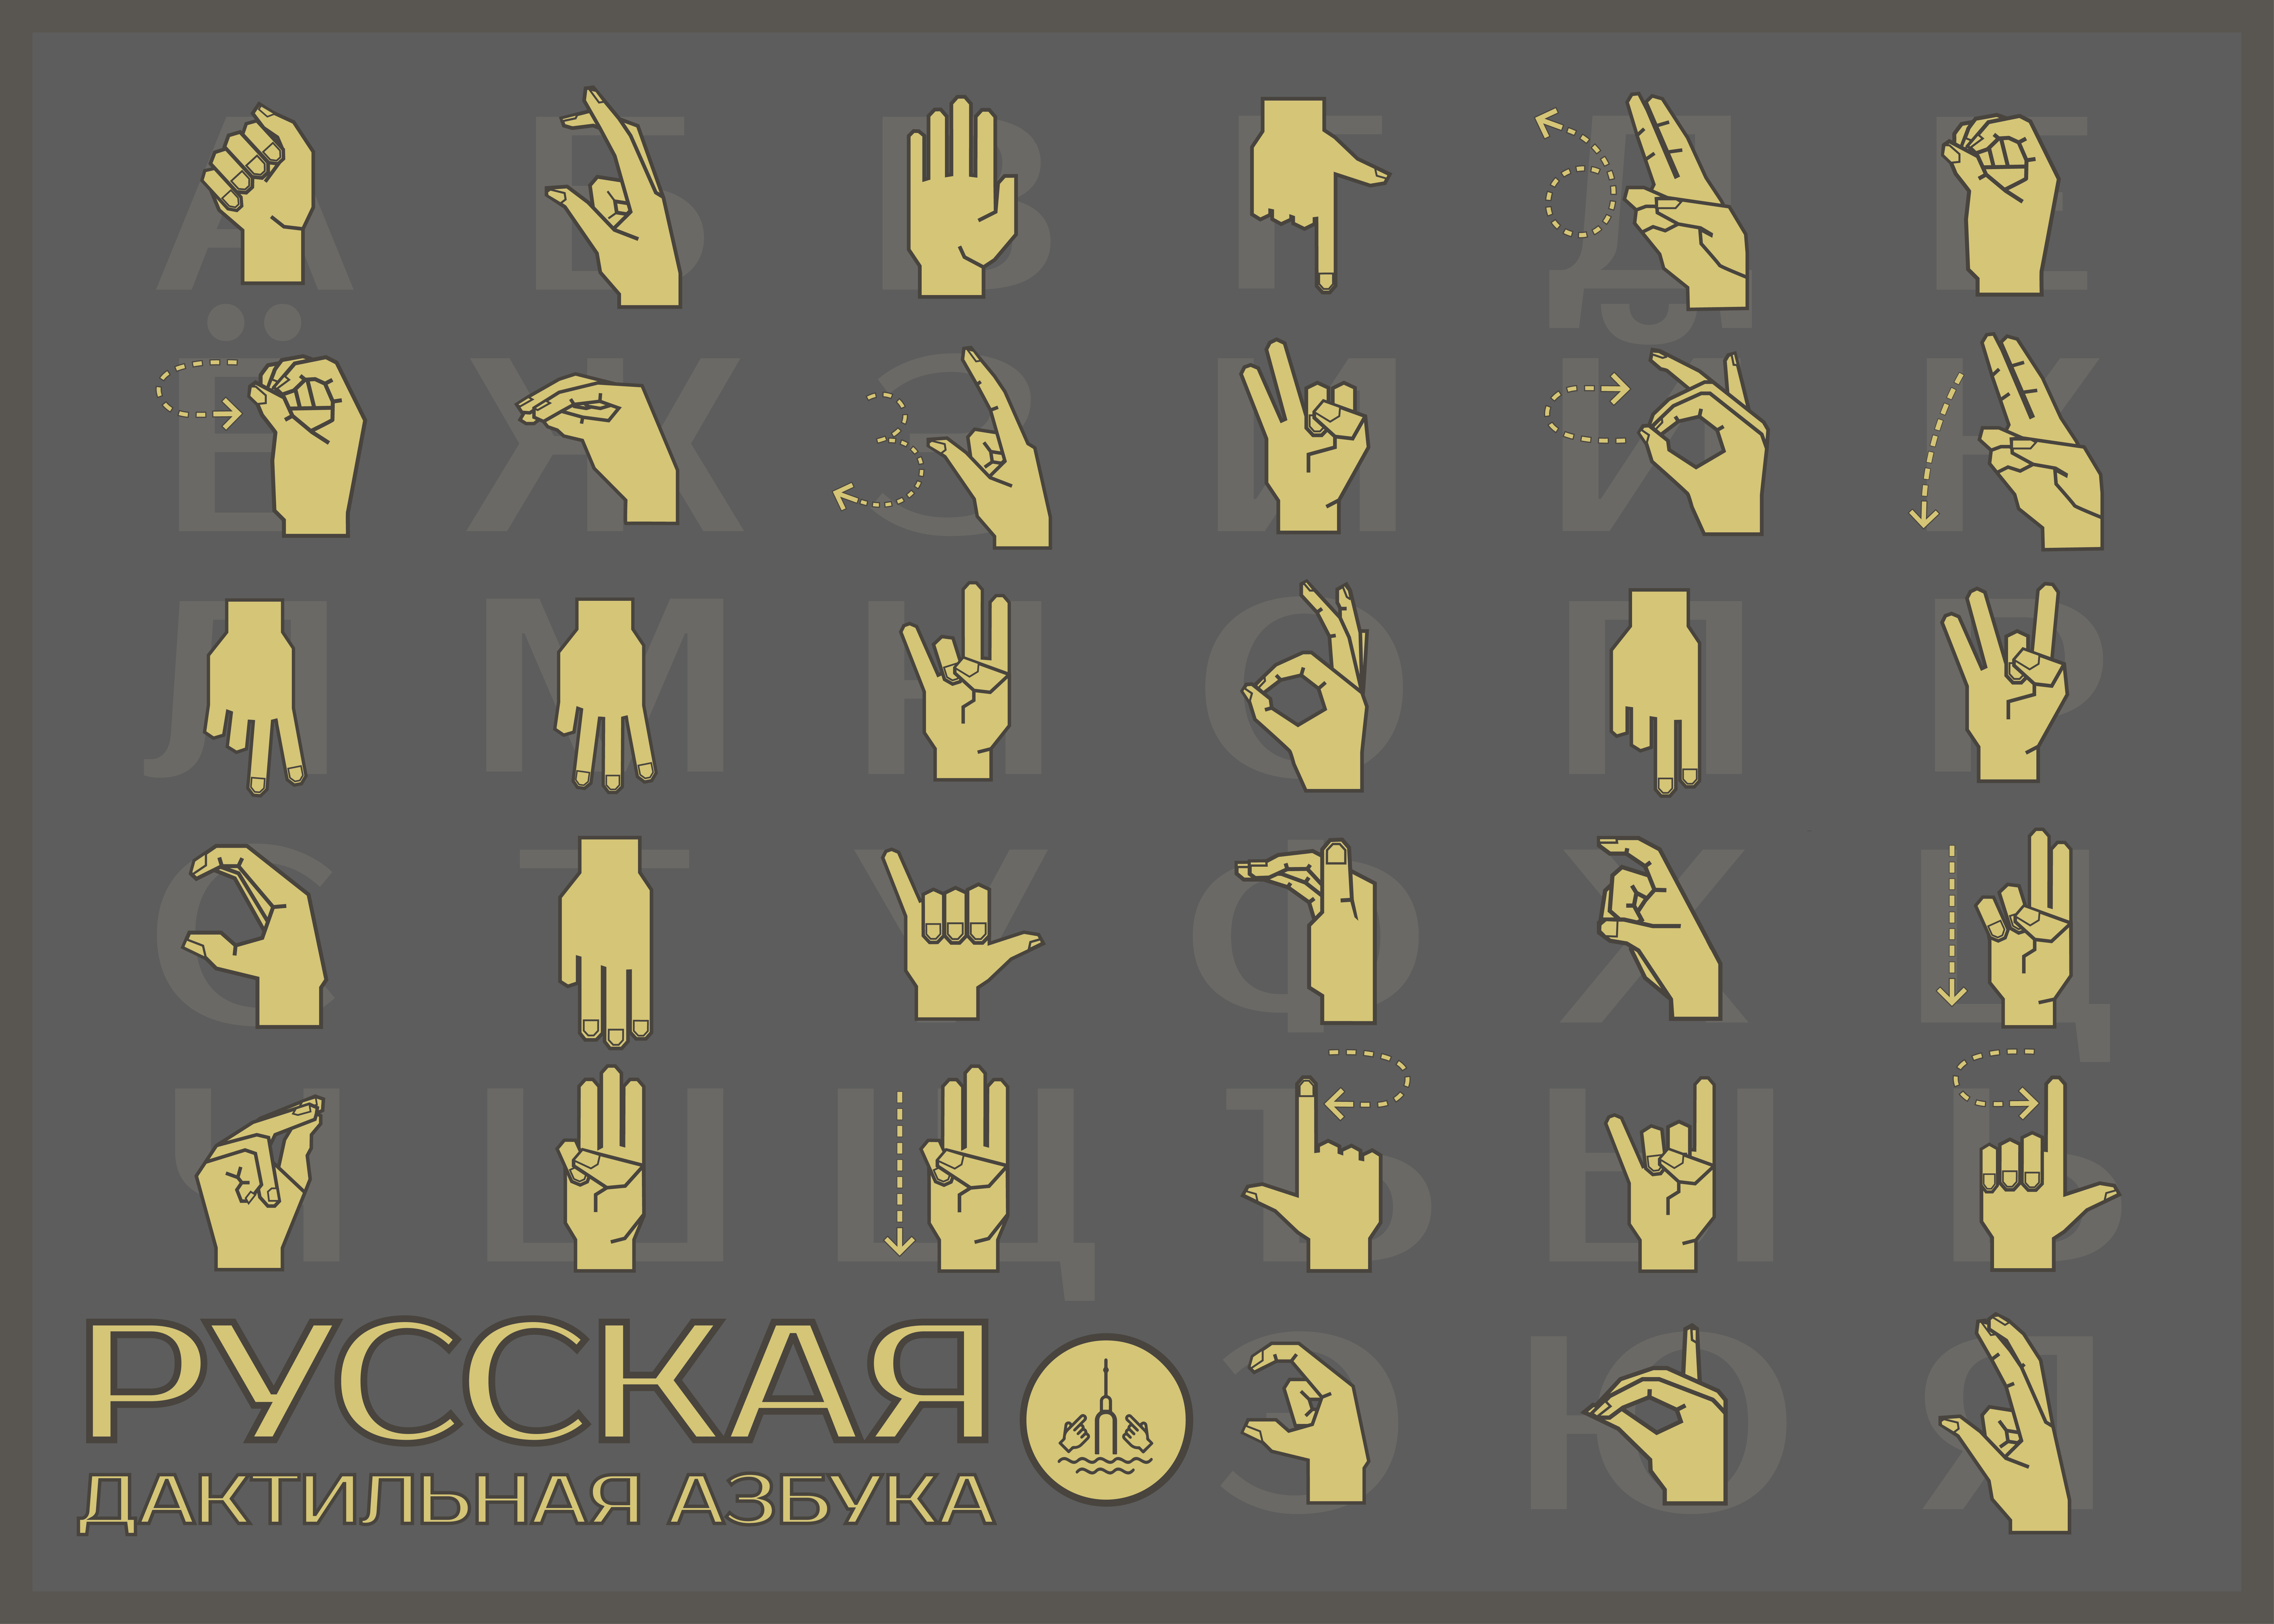 Алфавит жестов на русском